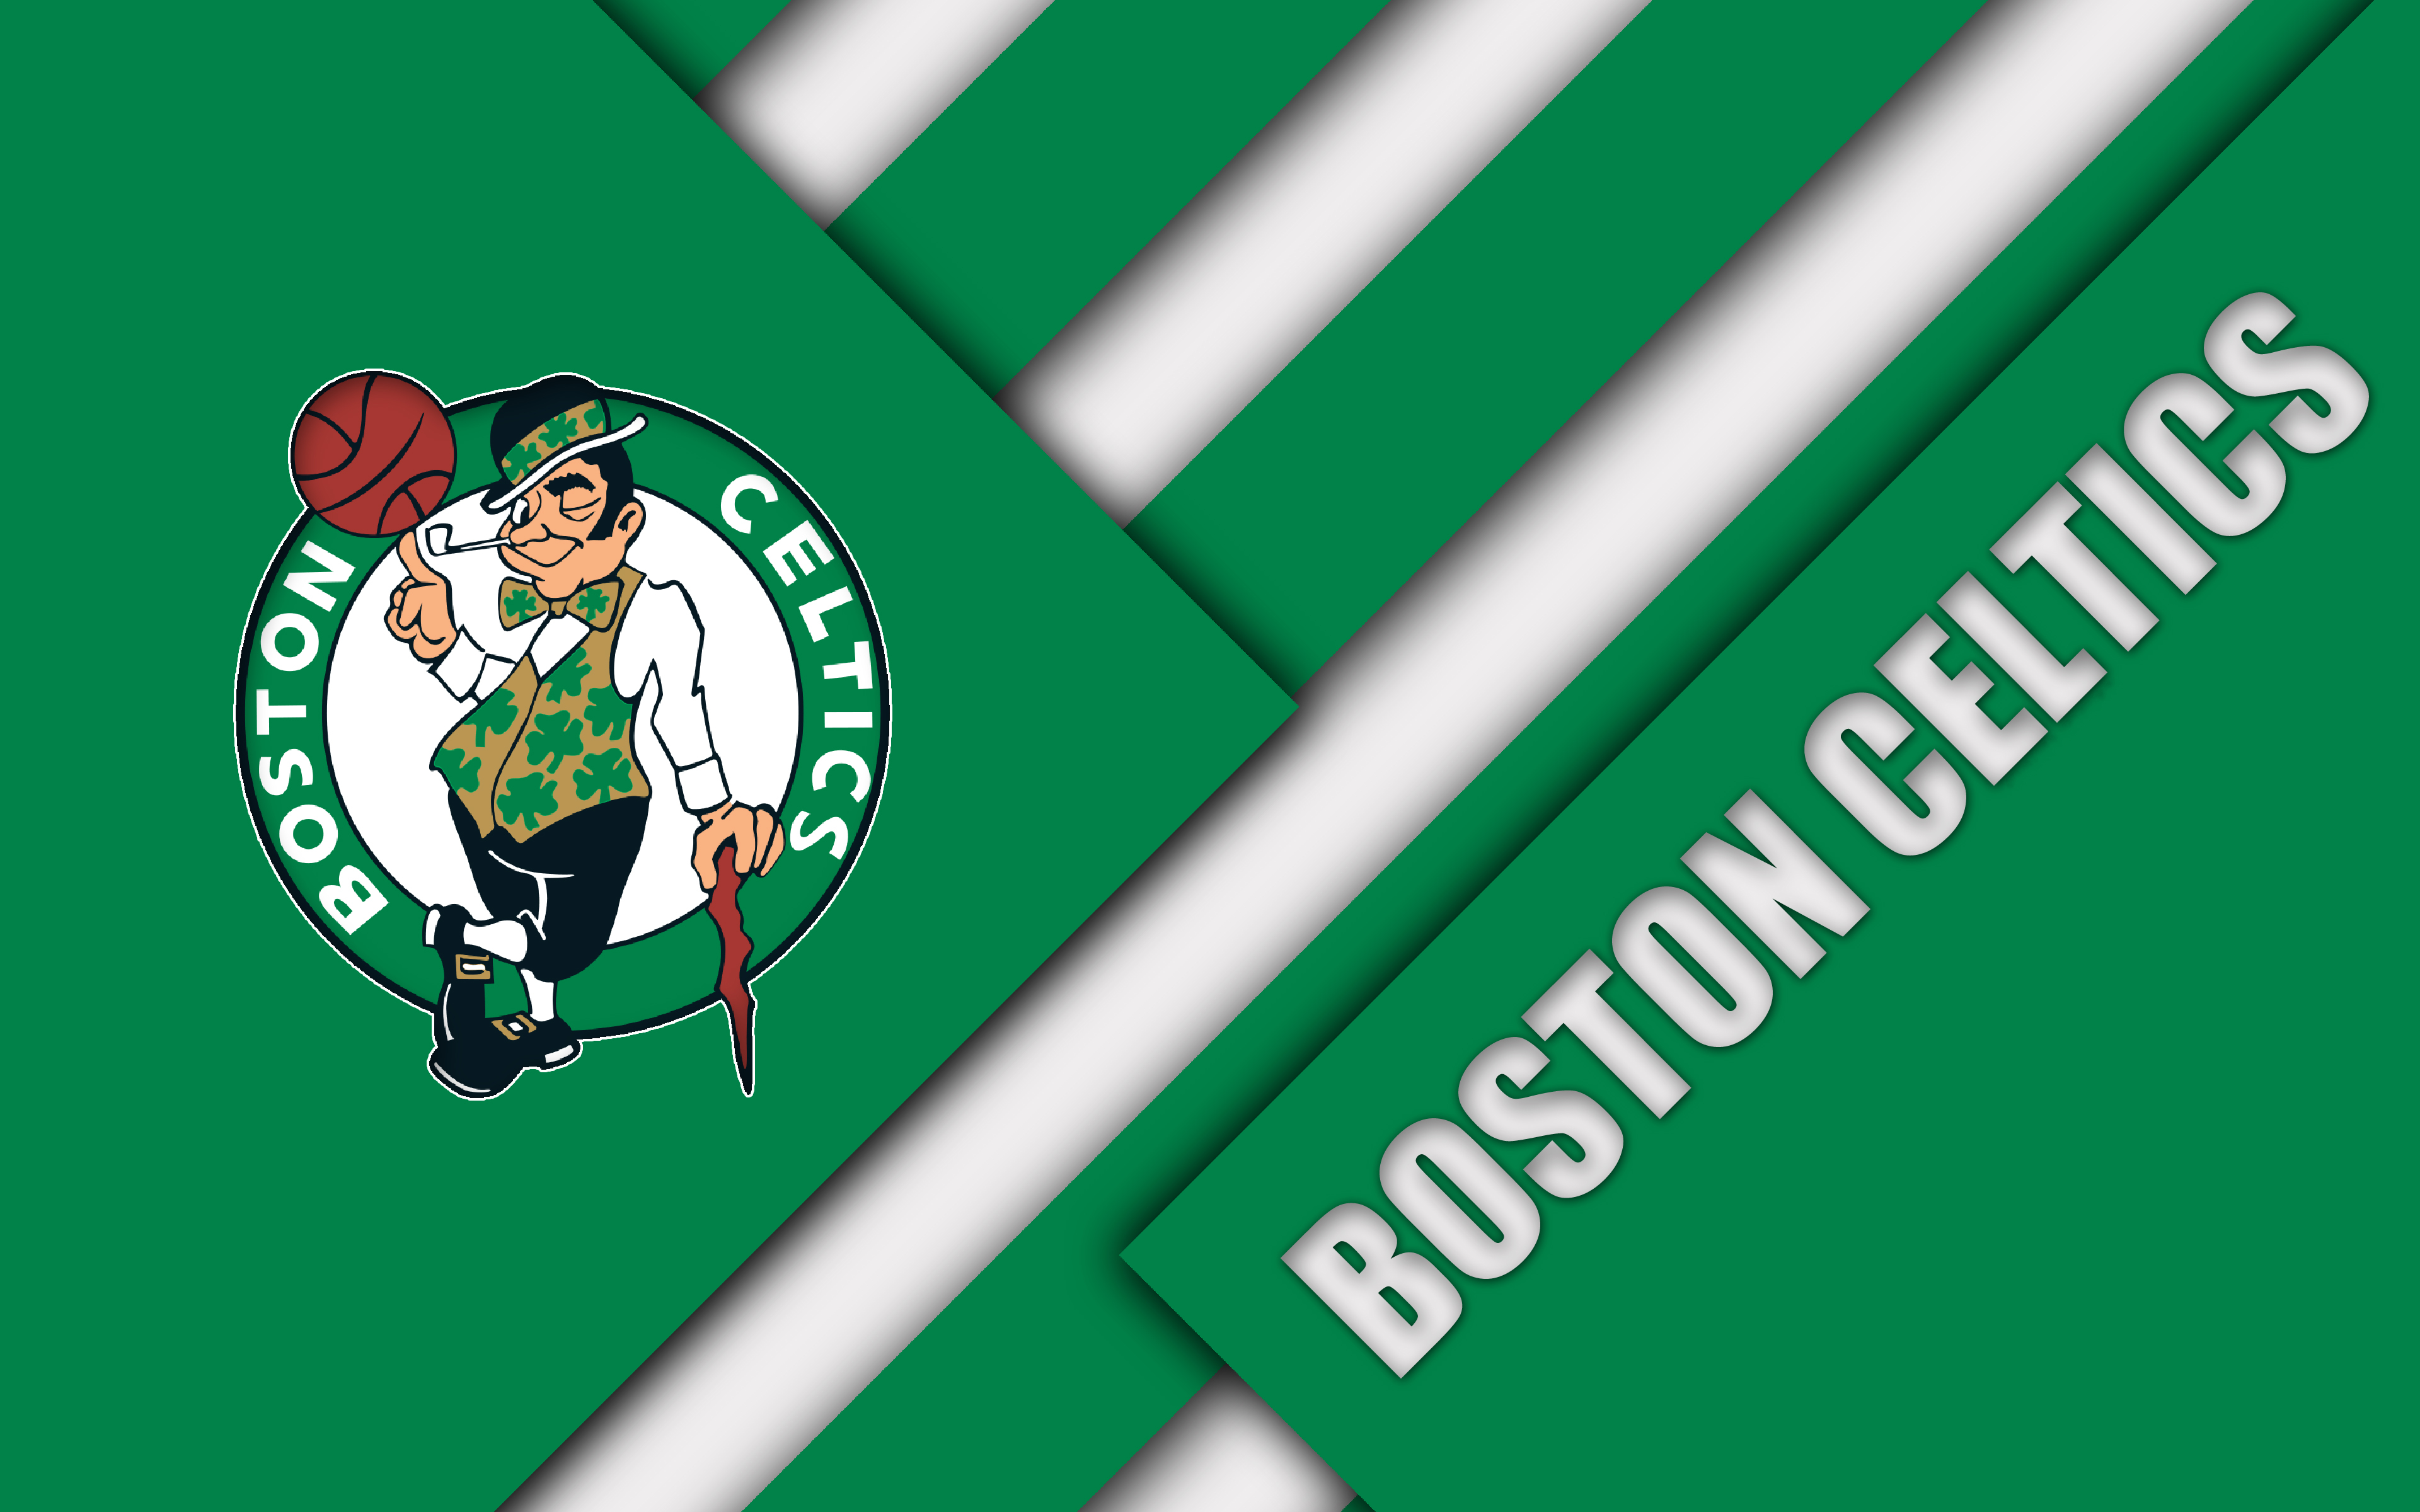 Boston Celtics scores